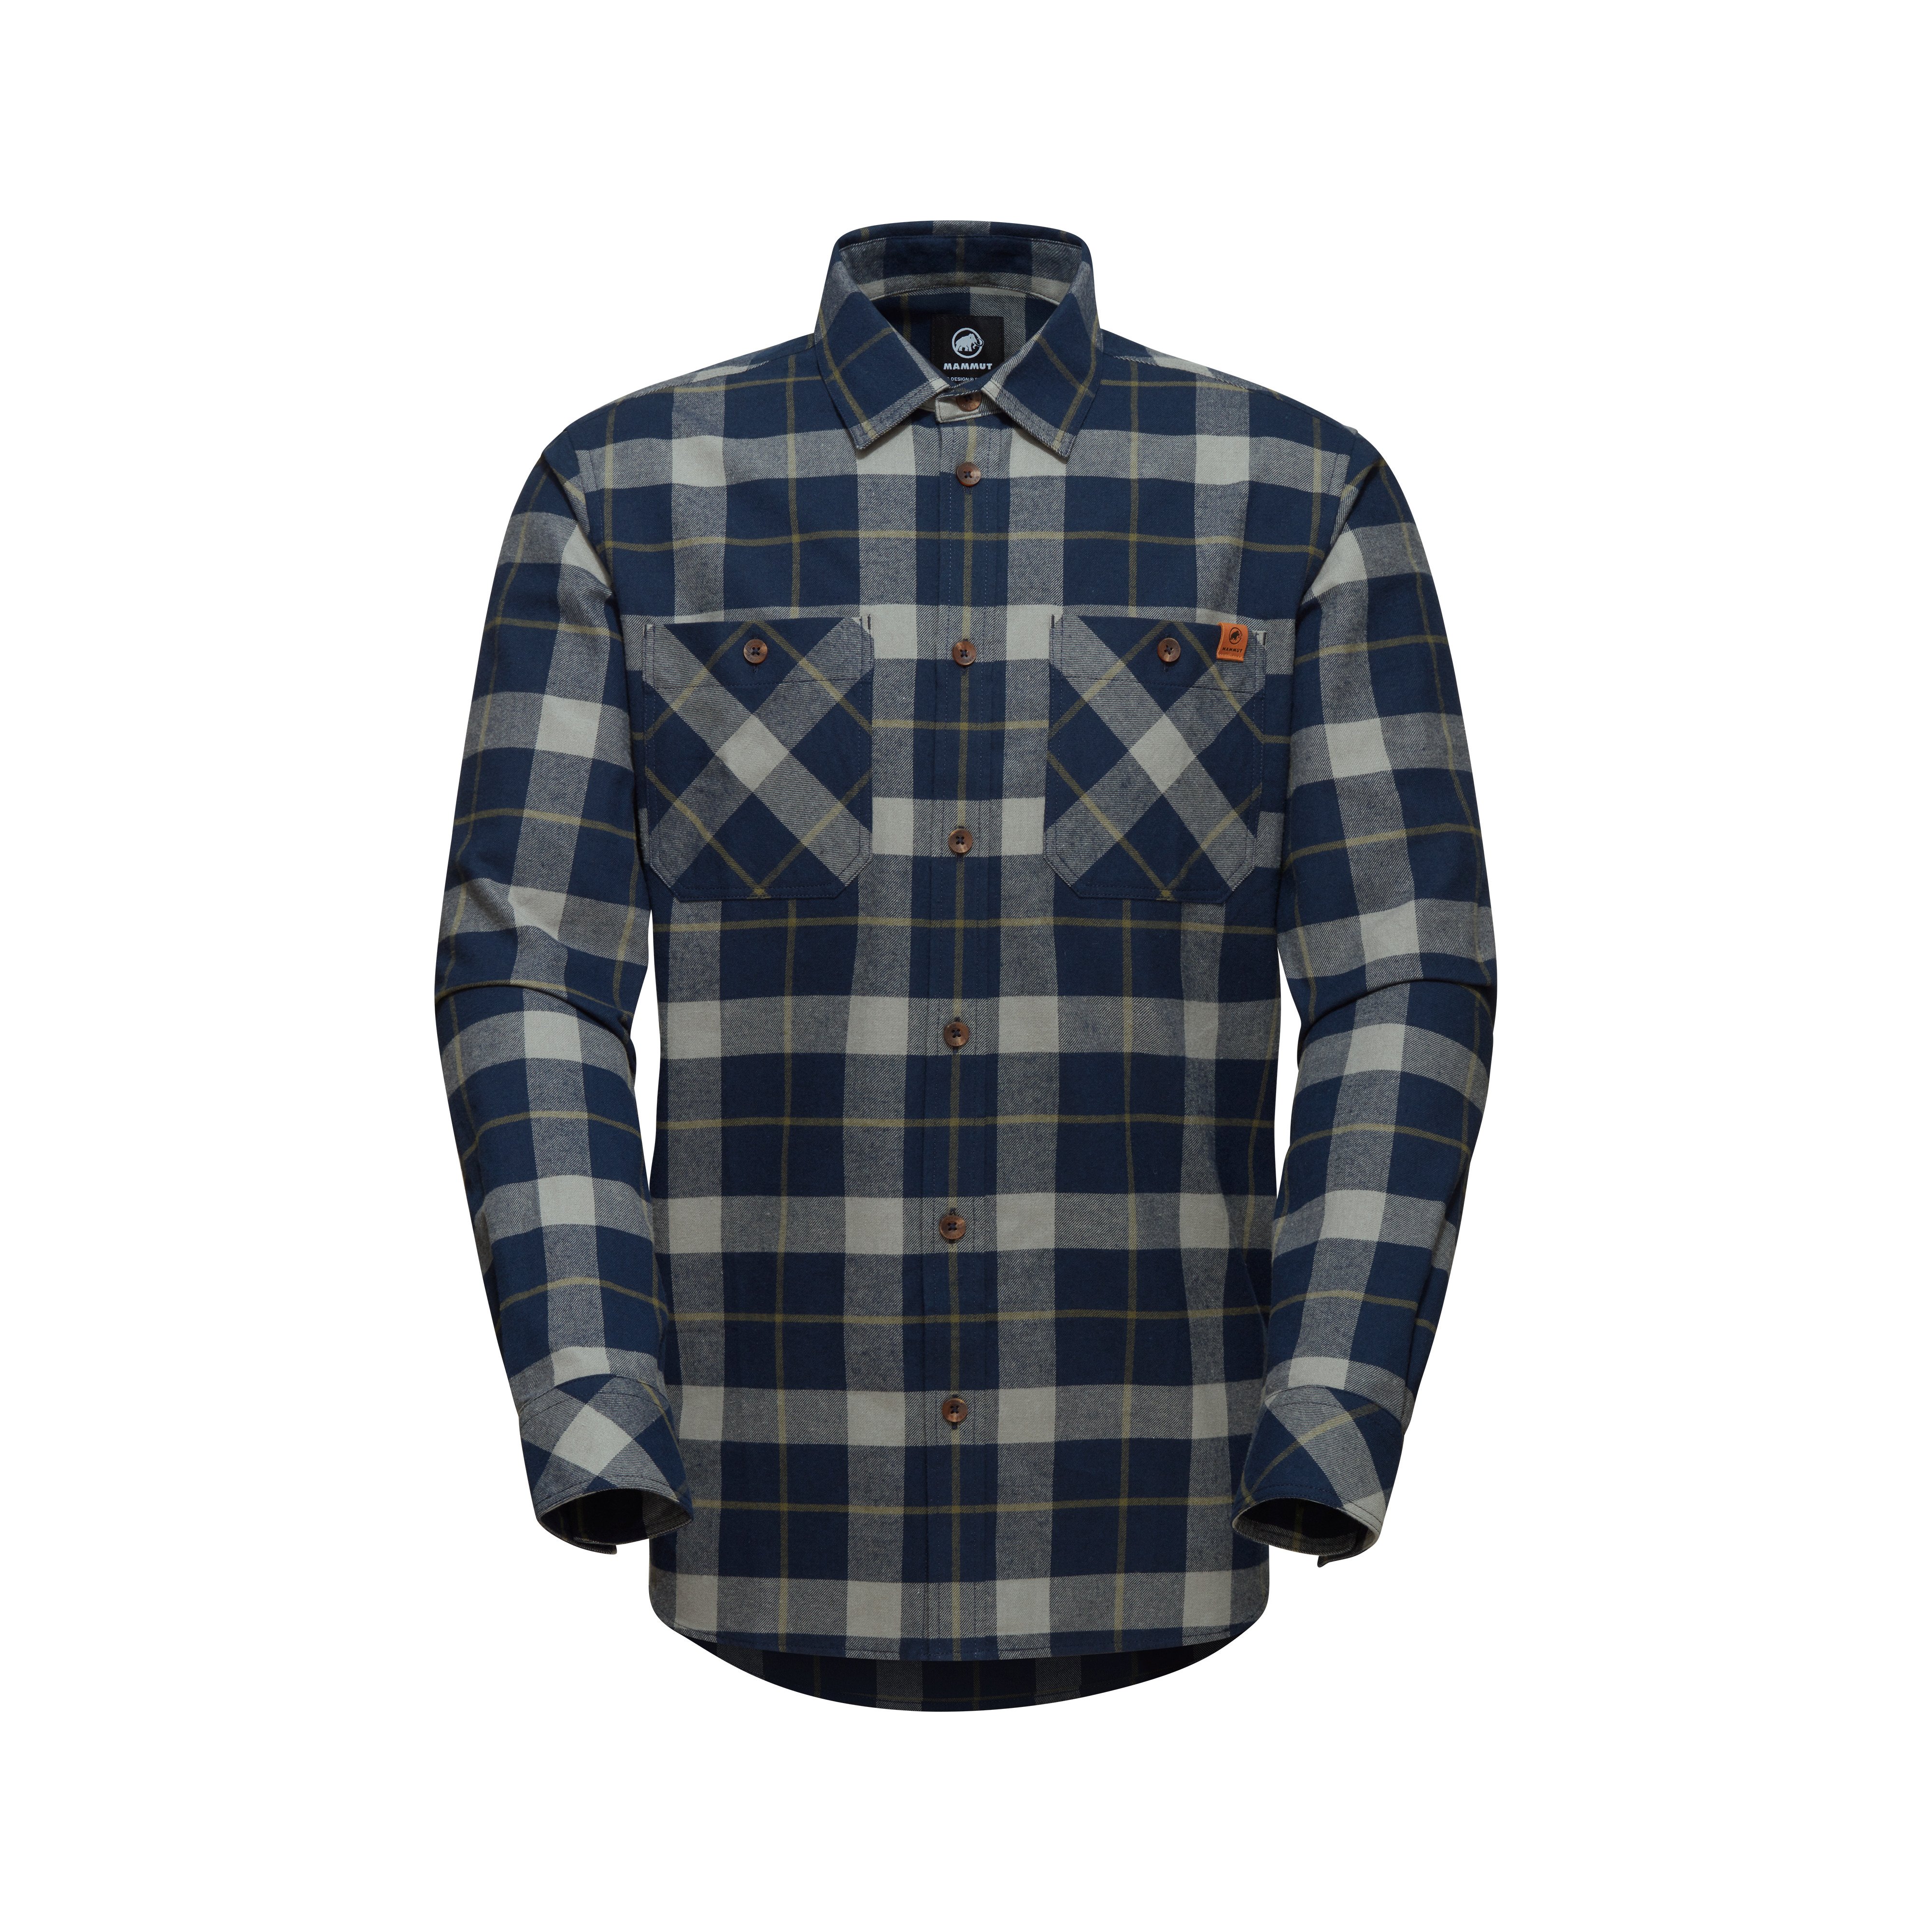 Alvra Longsleeve Shirt Men - marine-titanium, L product image